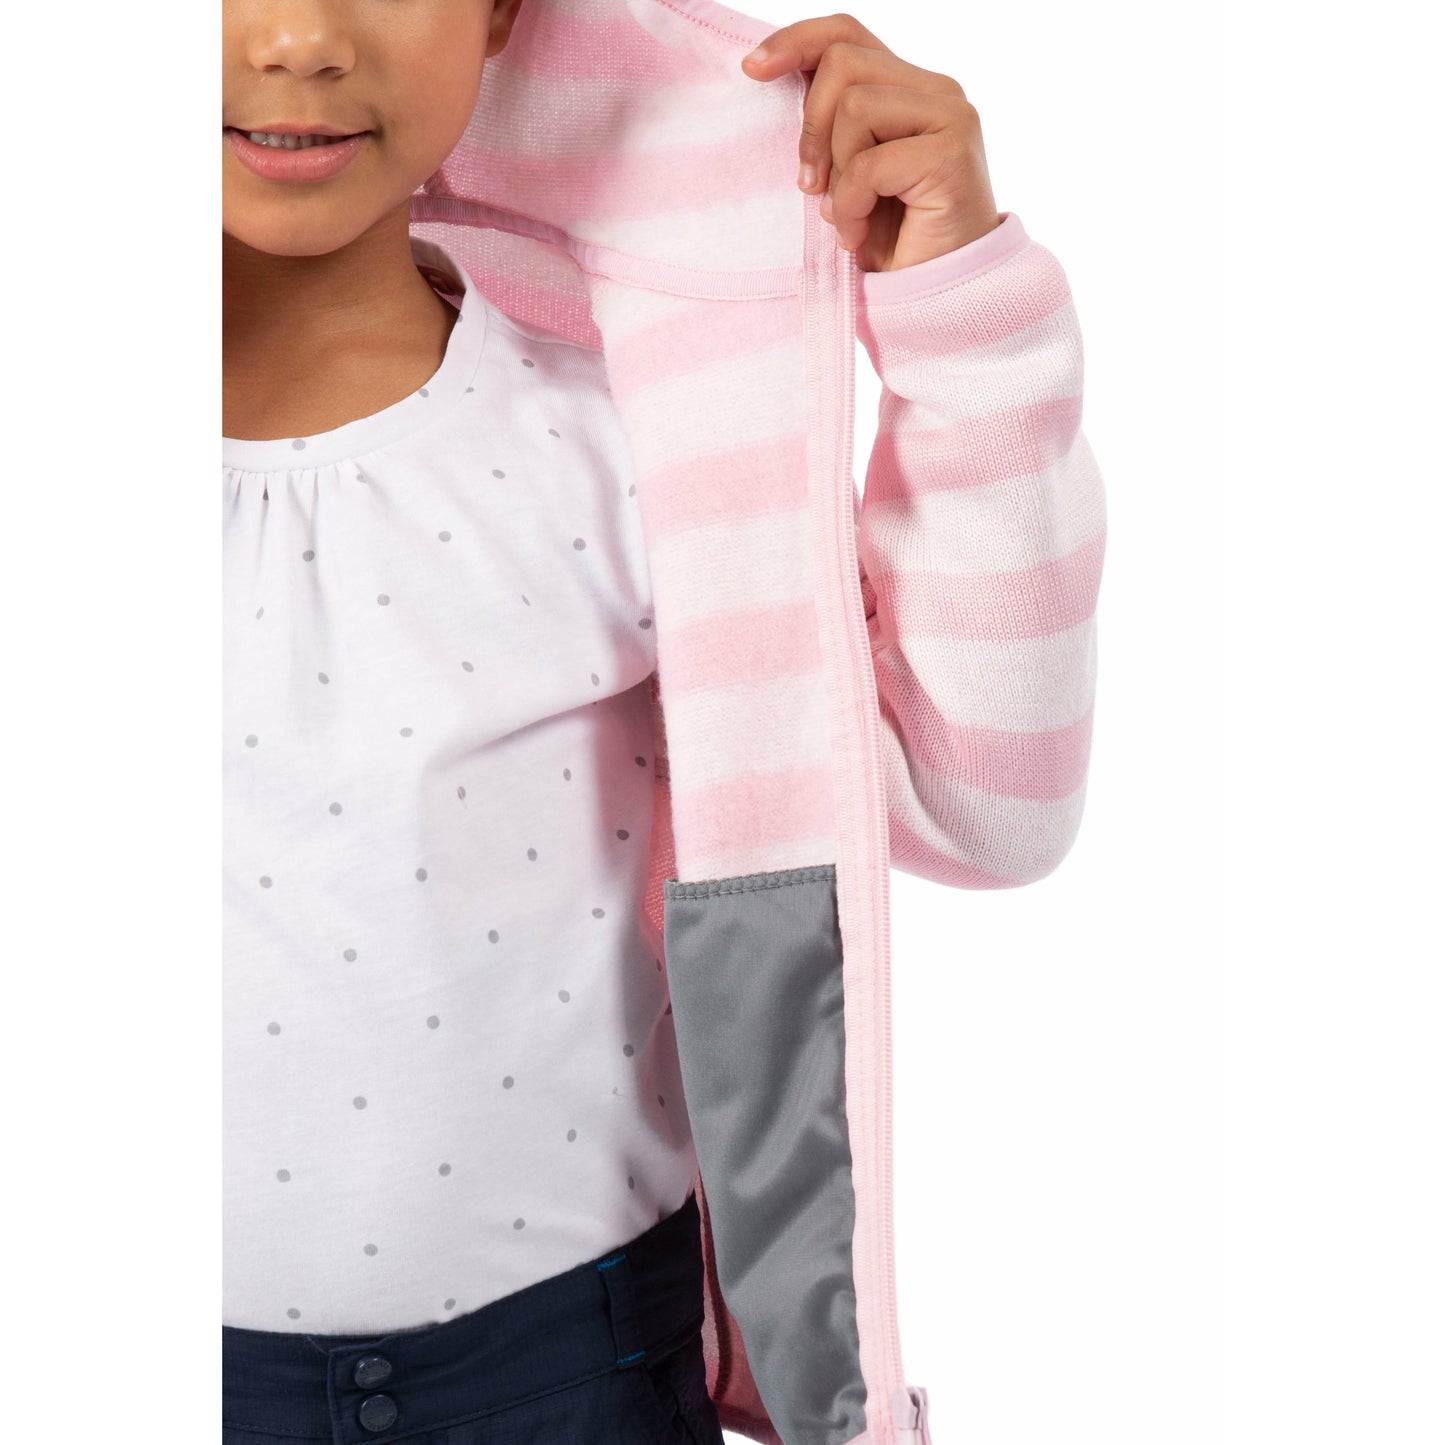 Conjure Girls' Fleece Hoodie in Pale Pink Stripe